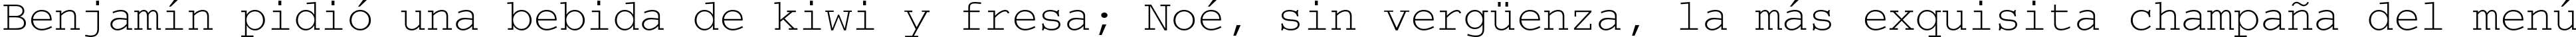 Пример написания шрифтом CourierTT текста на испанском